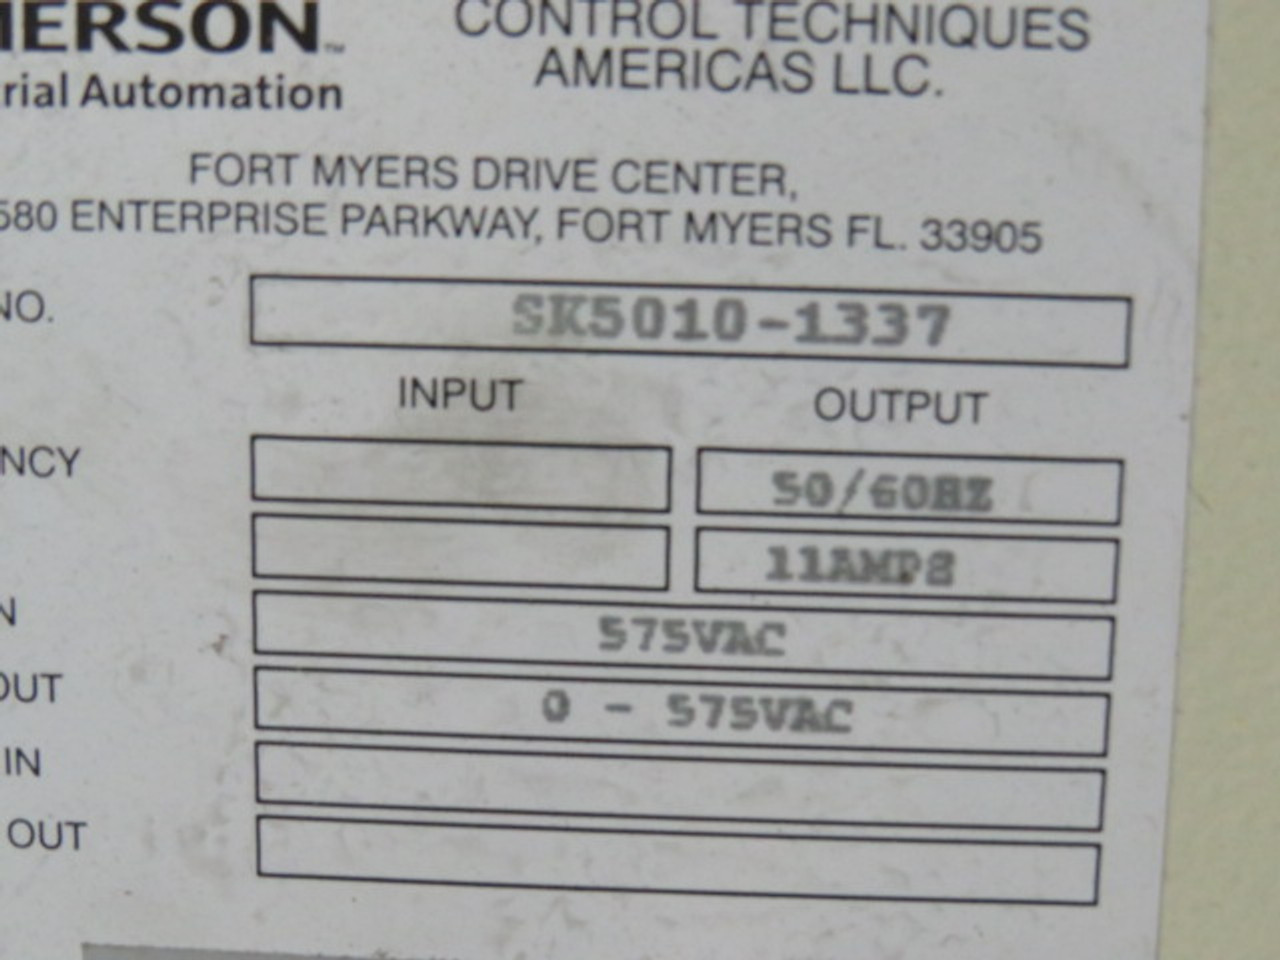 Emerson SK5010-1337 AC Drive 10HP 3Ph 575V 11A 50/60Hz USED